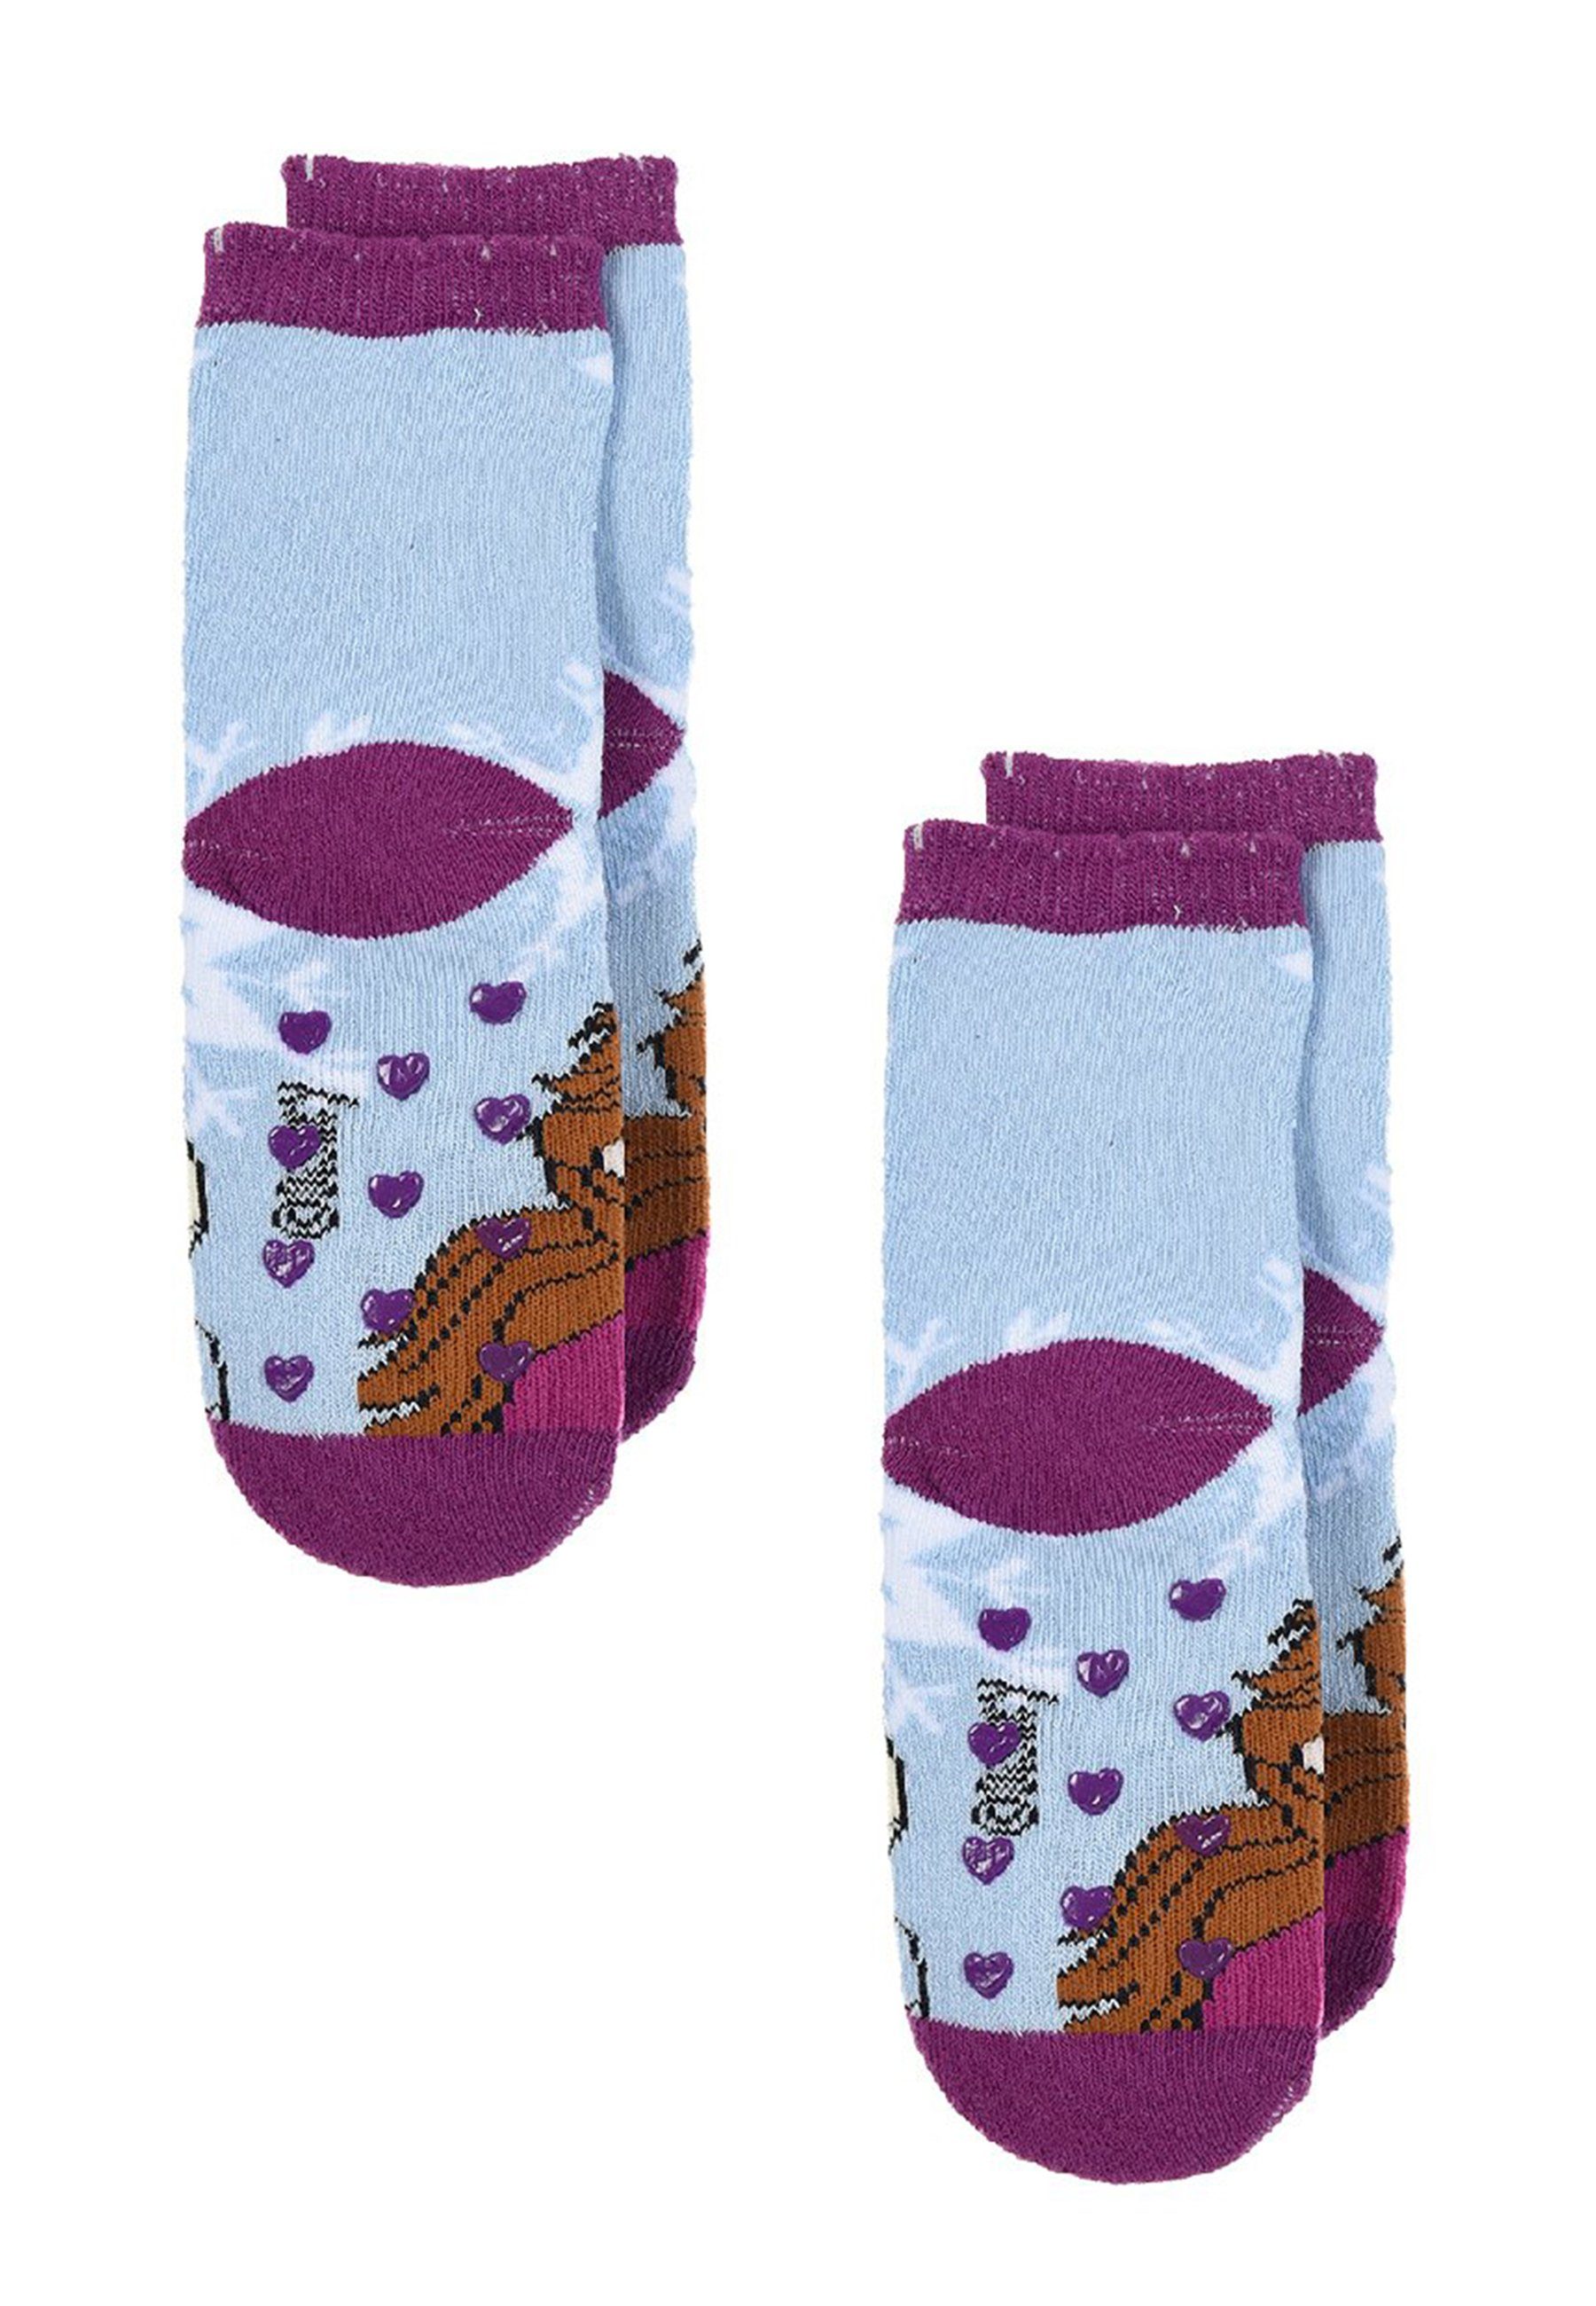 Wäsche Stoppersocken Disney Frozen ABS-Socken Eiskönigin Kinder Mädchen Socken 2 Paar Gumminoppen Stopper-Socken Strümpfe (2-Paa